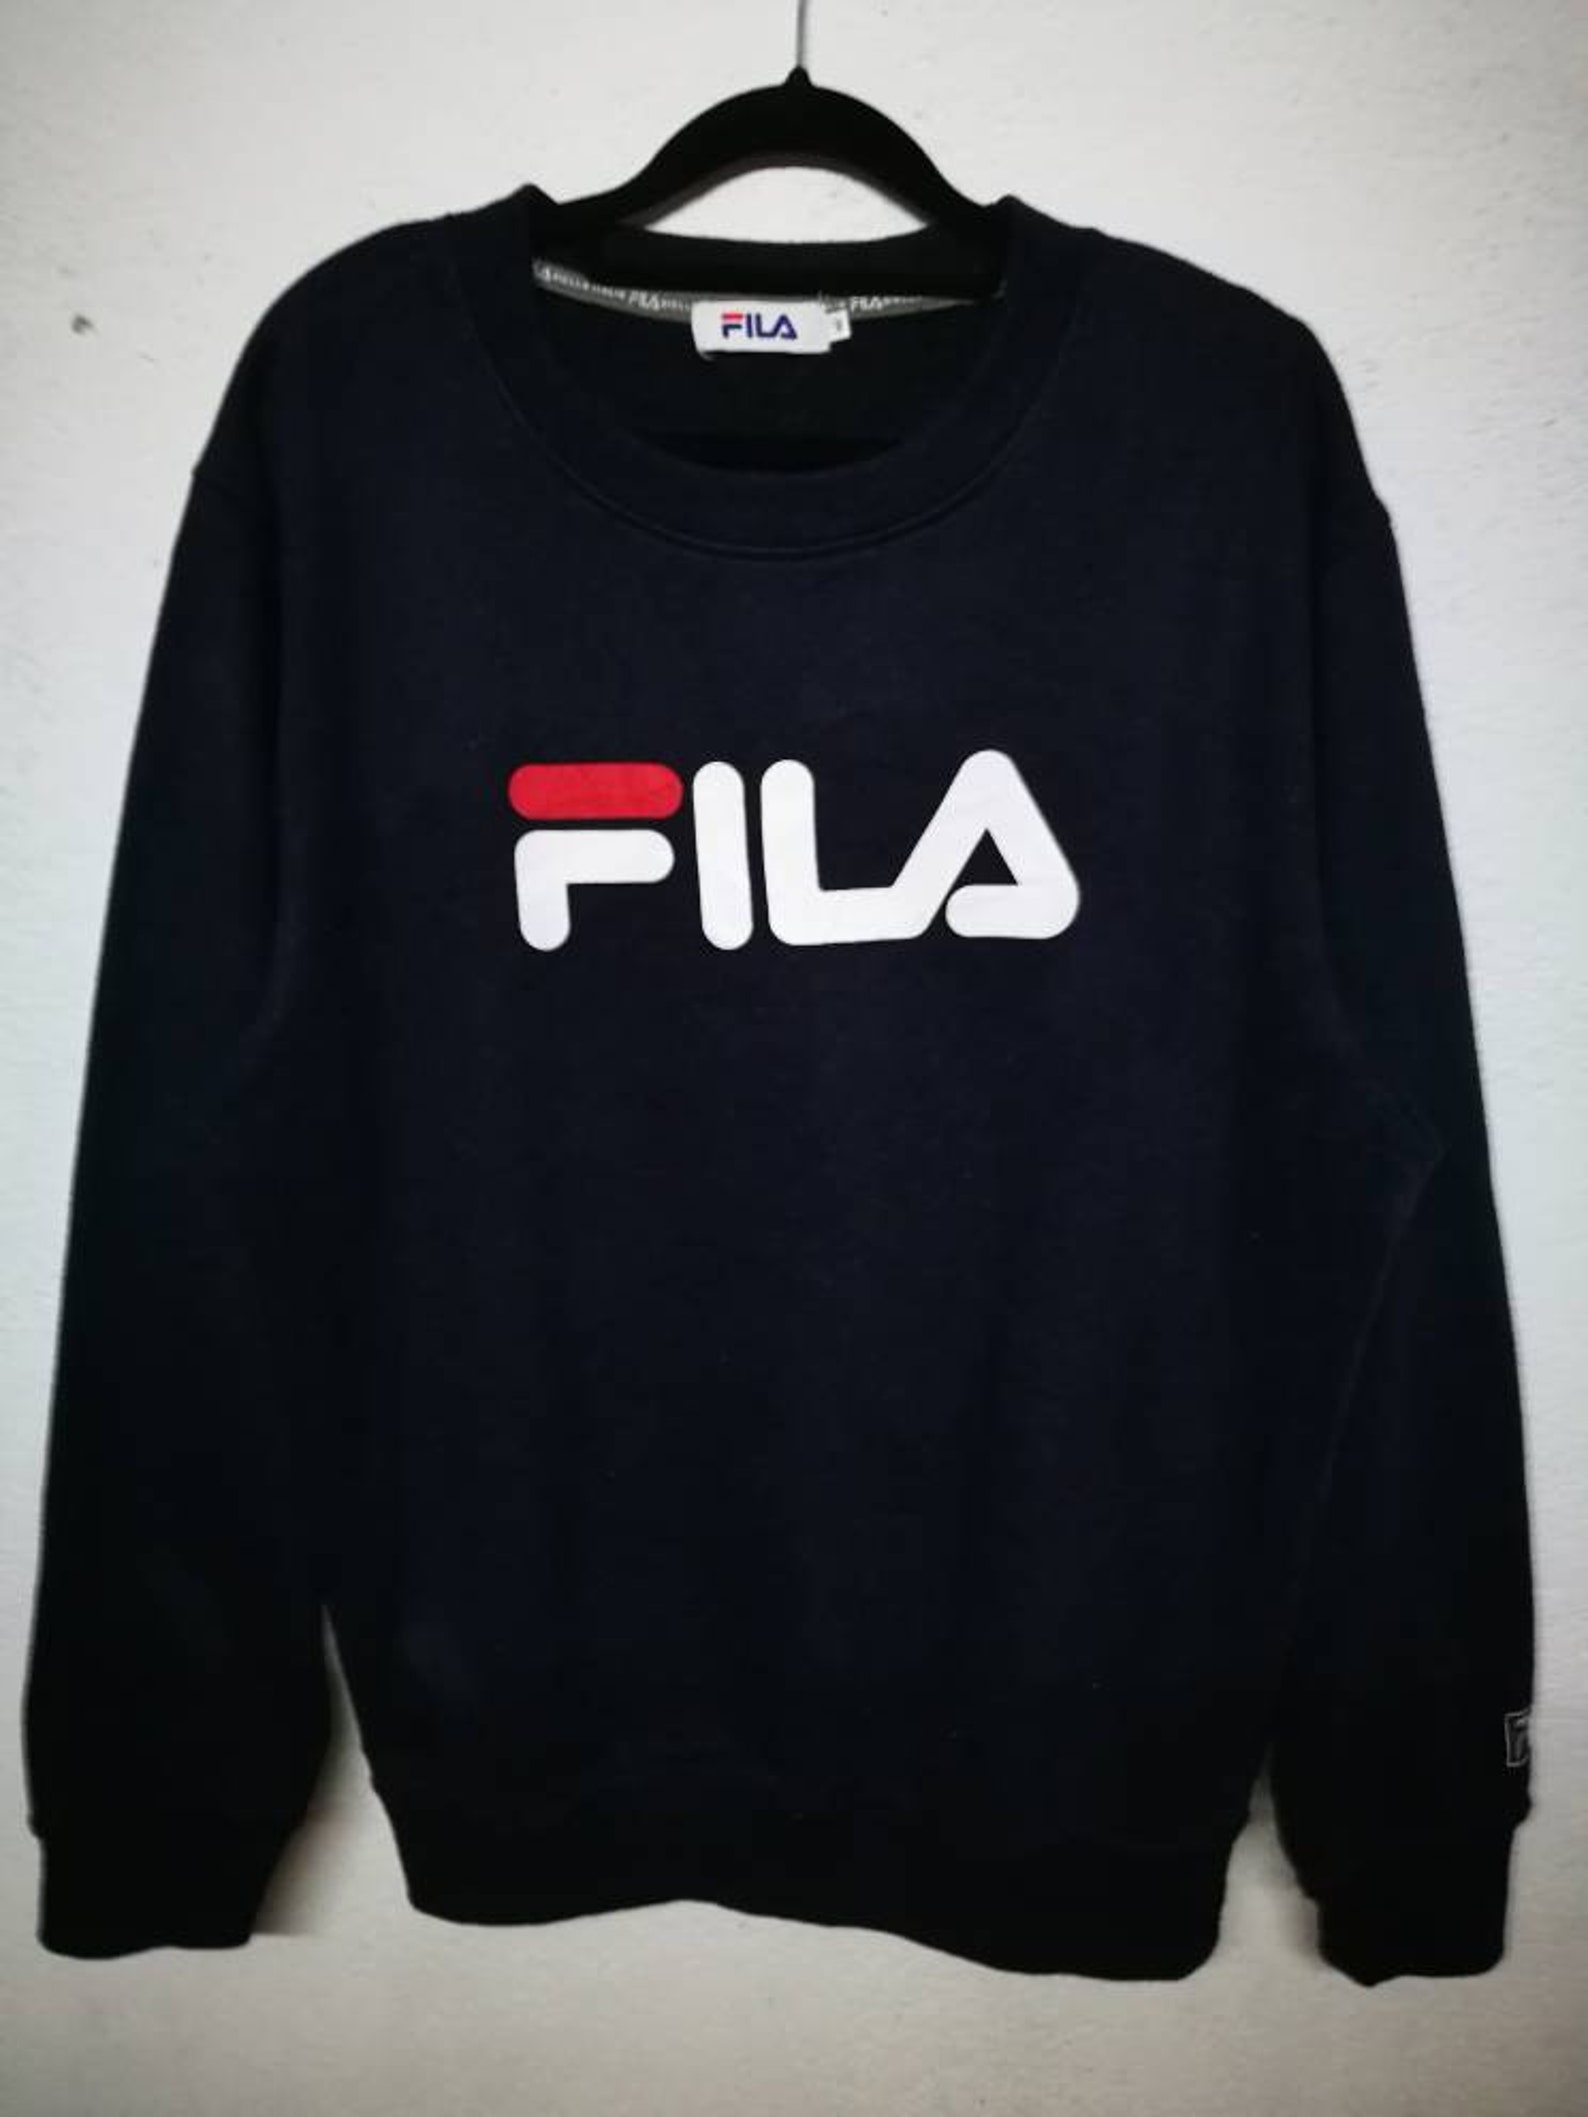 Fila Biella Italia Crewneck Pullover Spellout Sweatshirt | Etsy